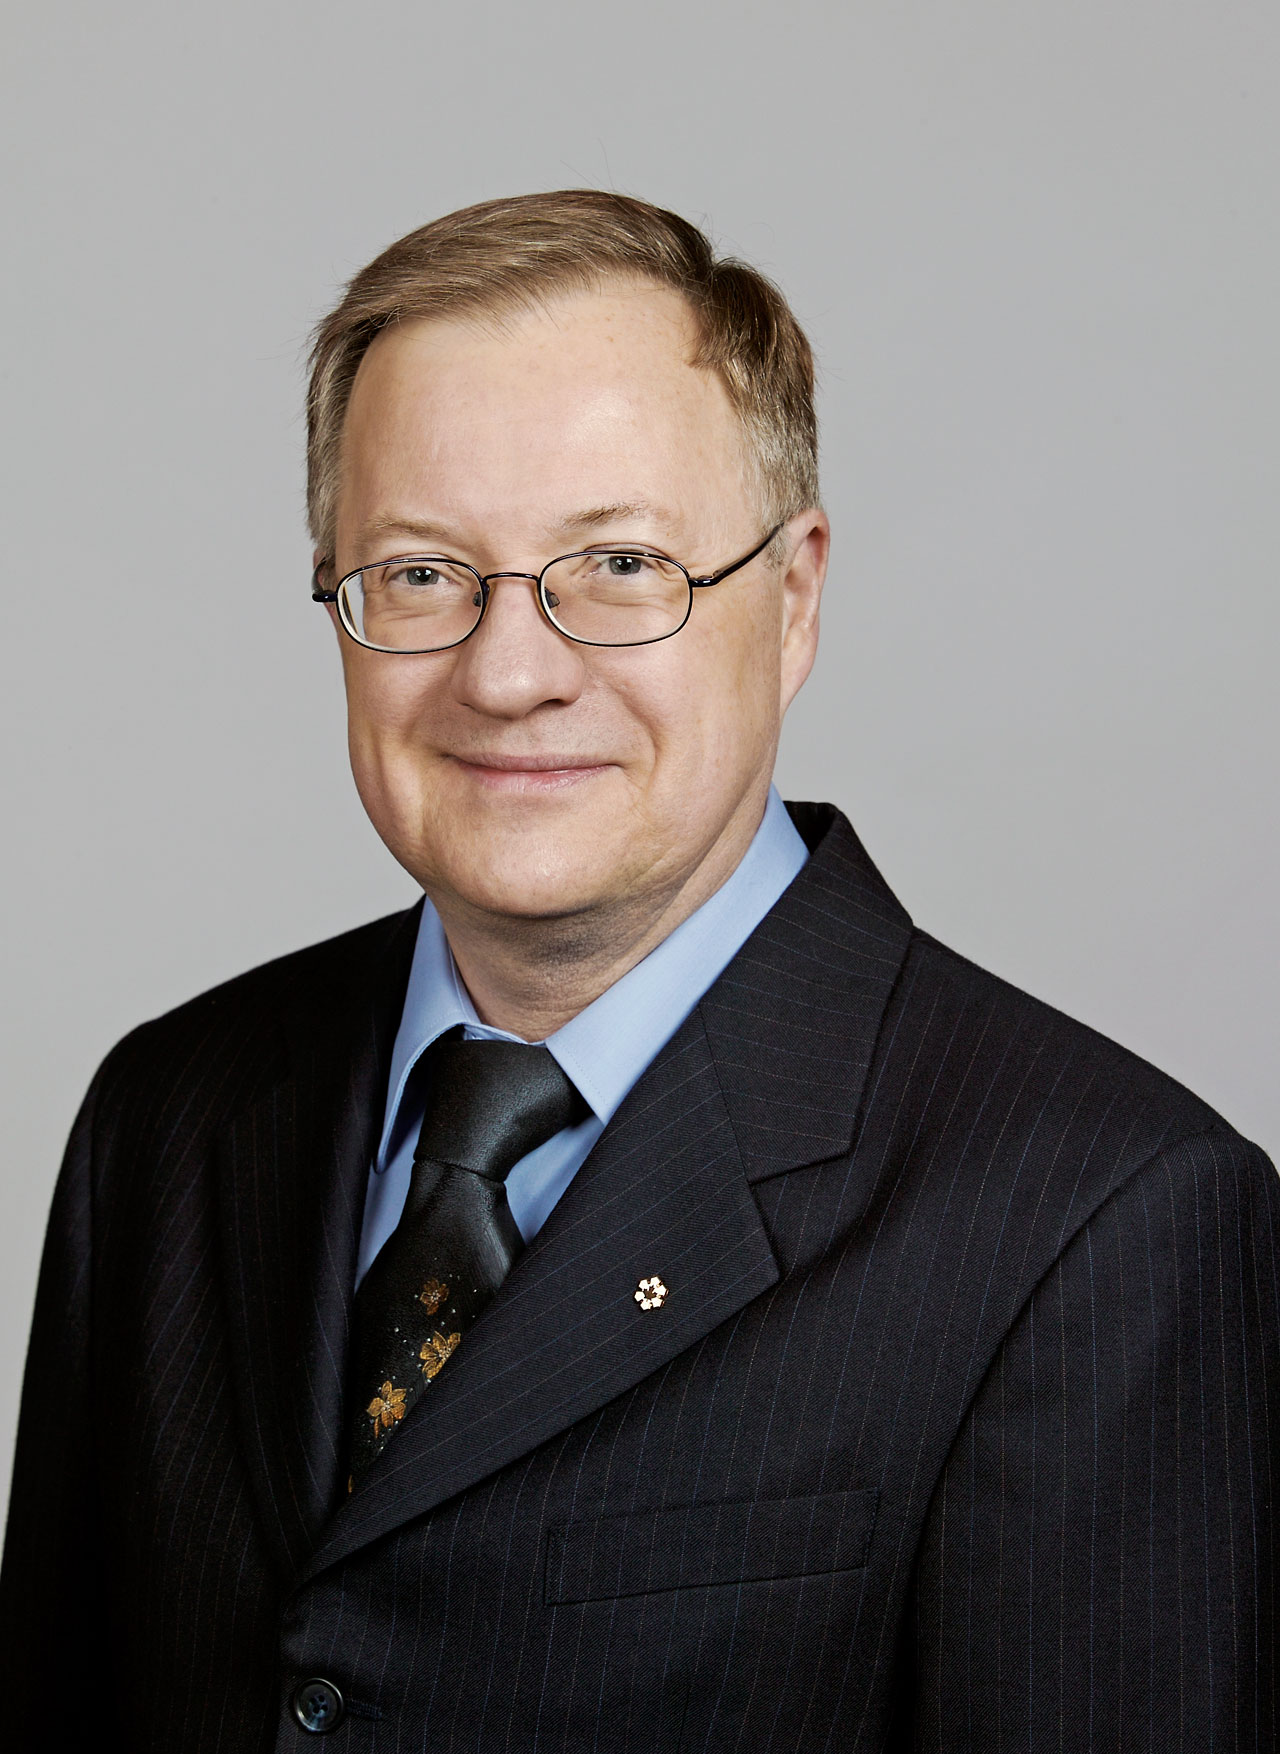 Dr. J. Richard Bond